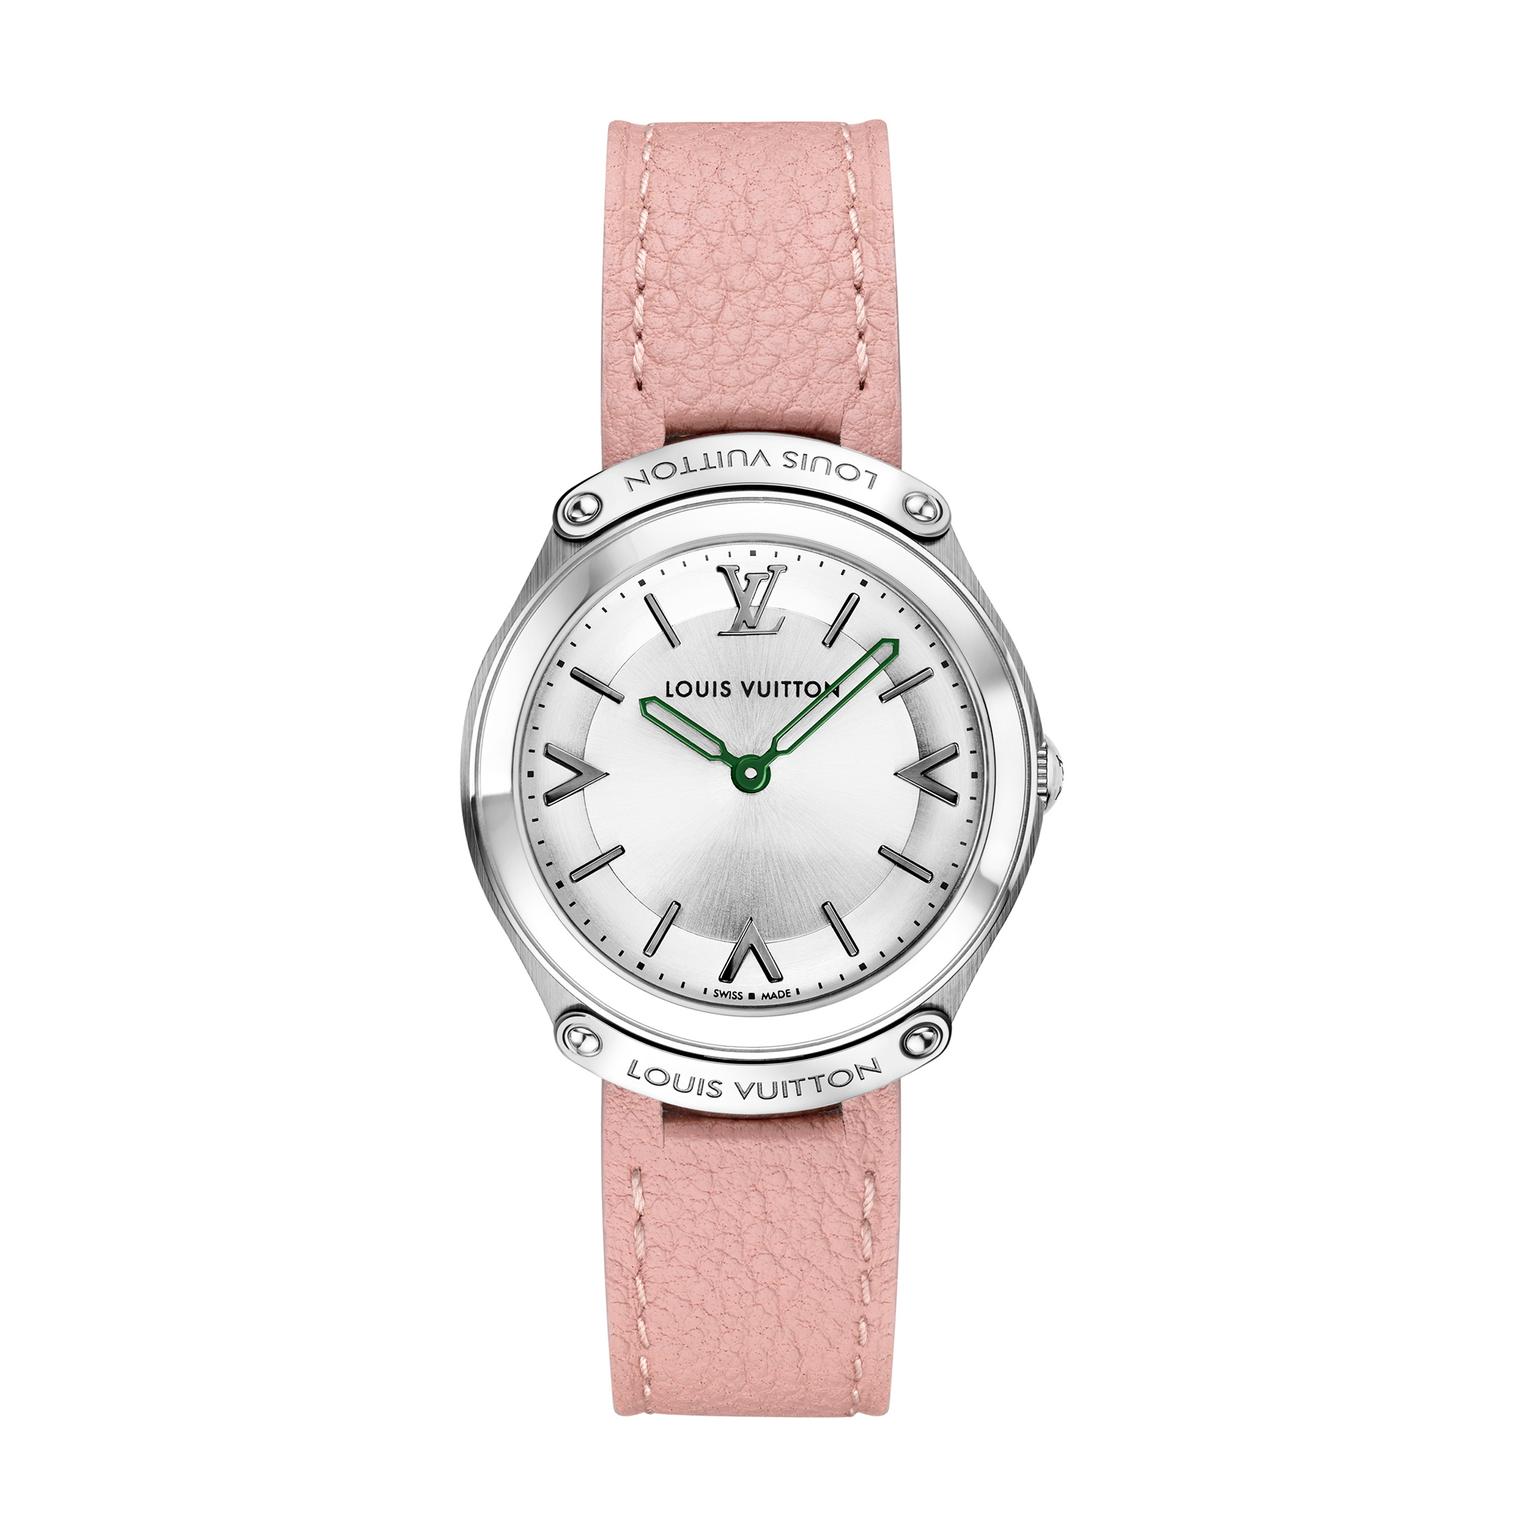 Free: LOOK AT THIS 3 WatchesTimex Women Watch , Stainless steel Caseback ,  Louis Vaitton Paris Watch - Watches -  Auctions for Free Stuff